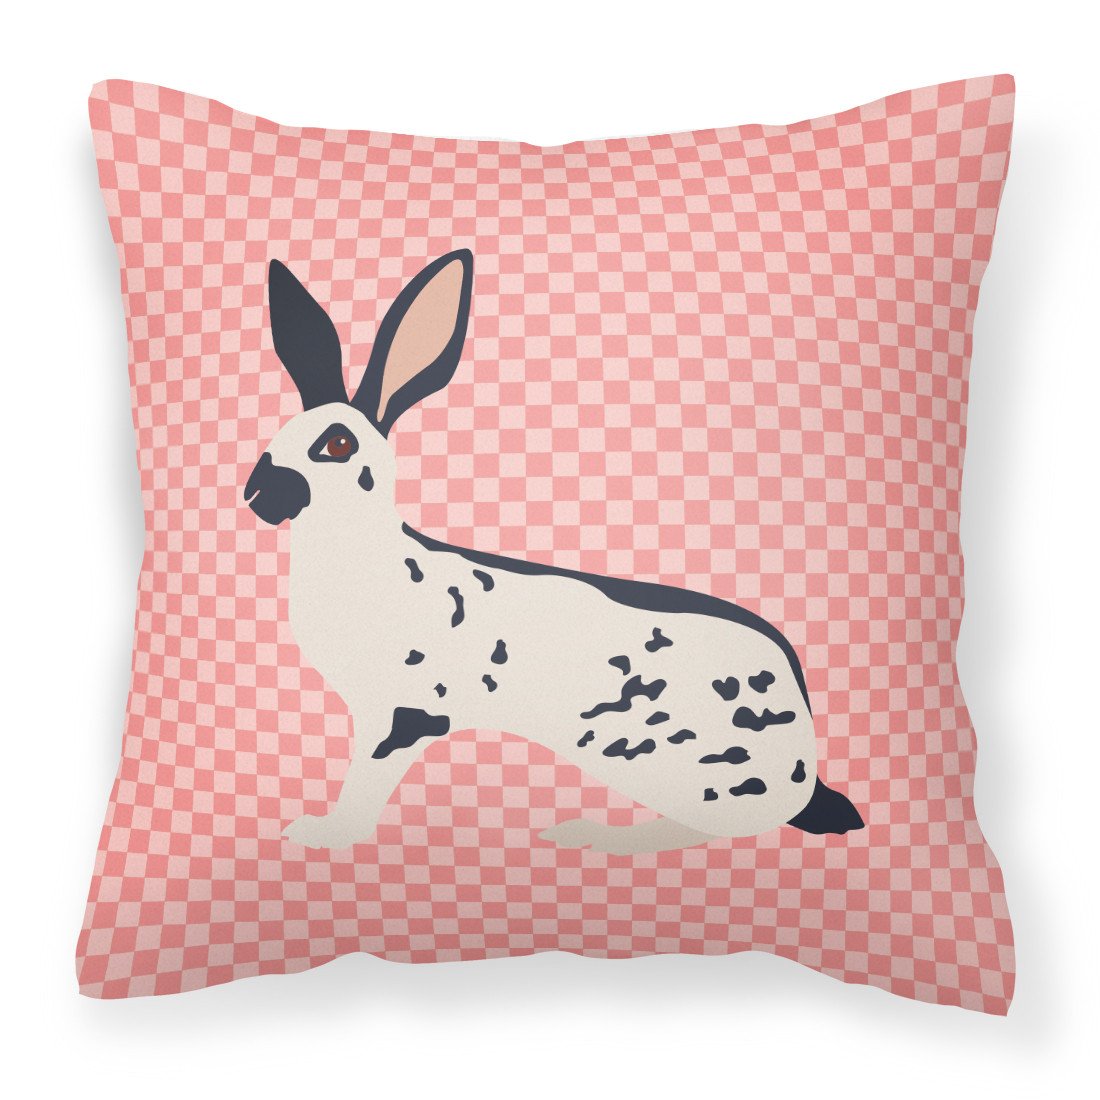 English Spot Rabbit Pink Check Fabric Decorative Pillow BB7961PW1818 by Caroline's Treasures